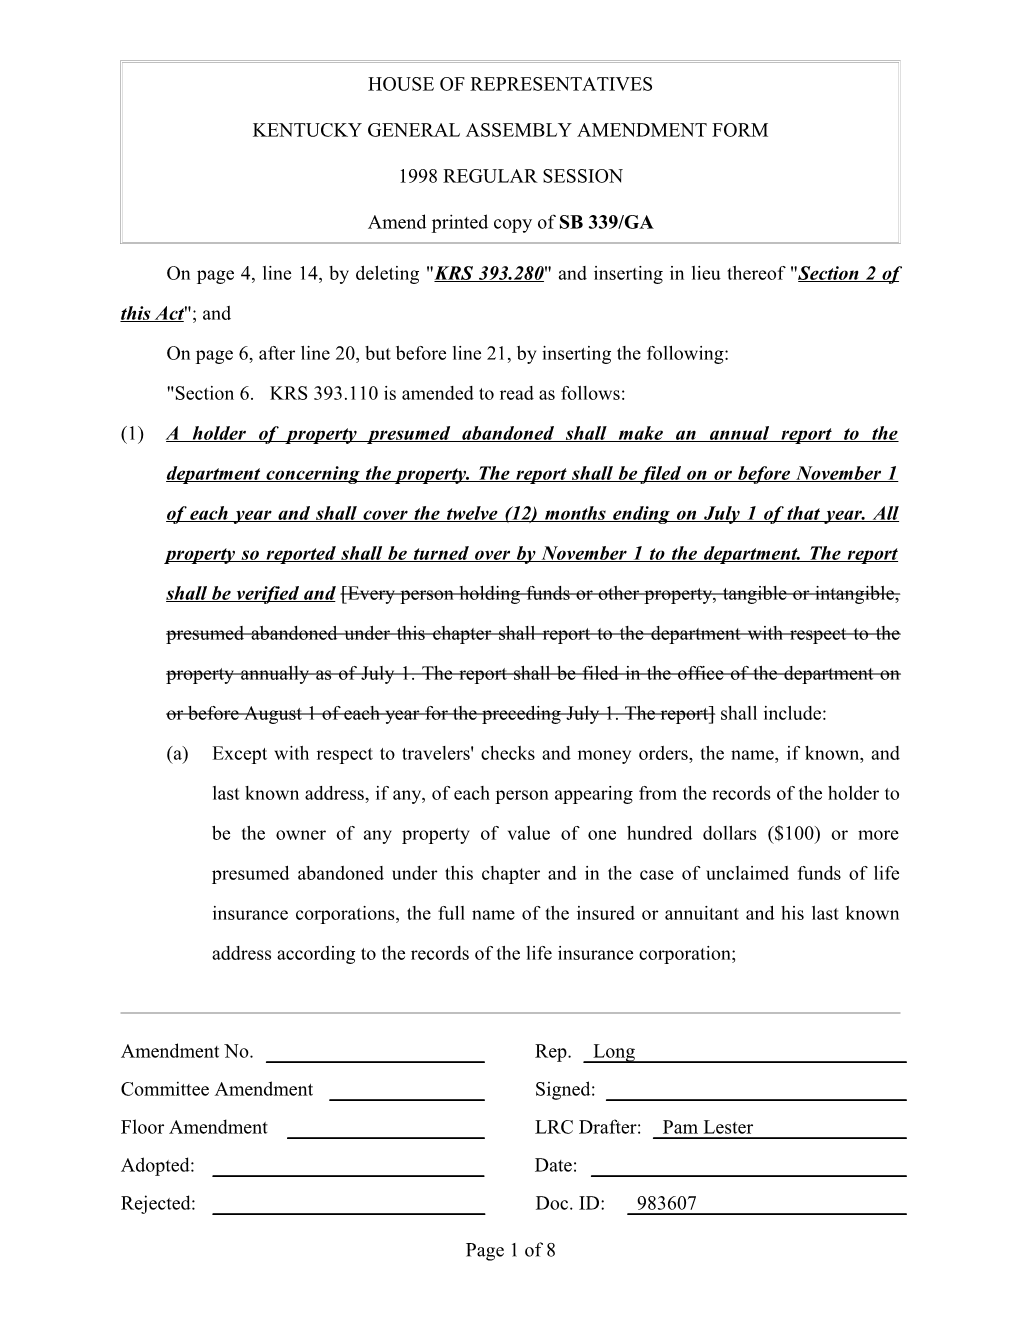 Kentucky General Assembly Amendment Form s11